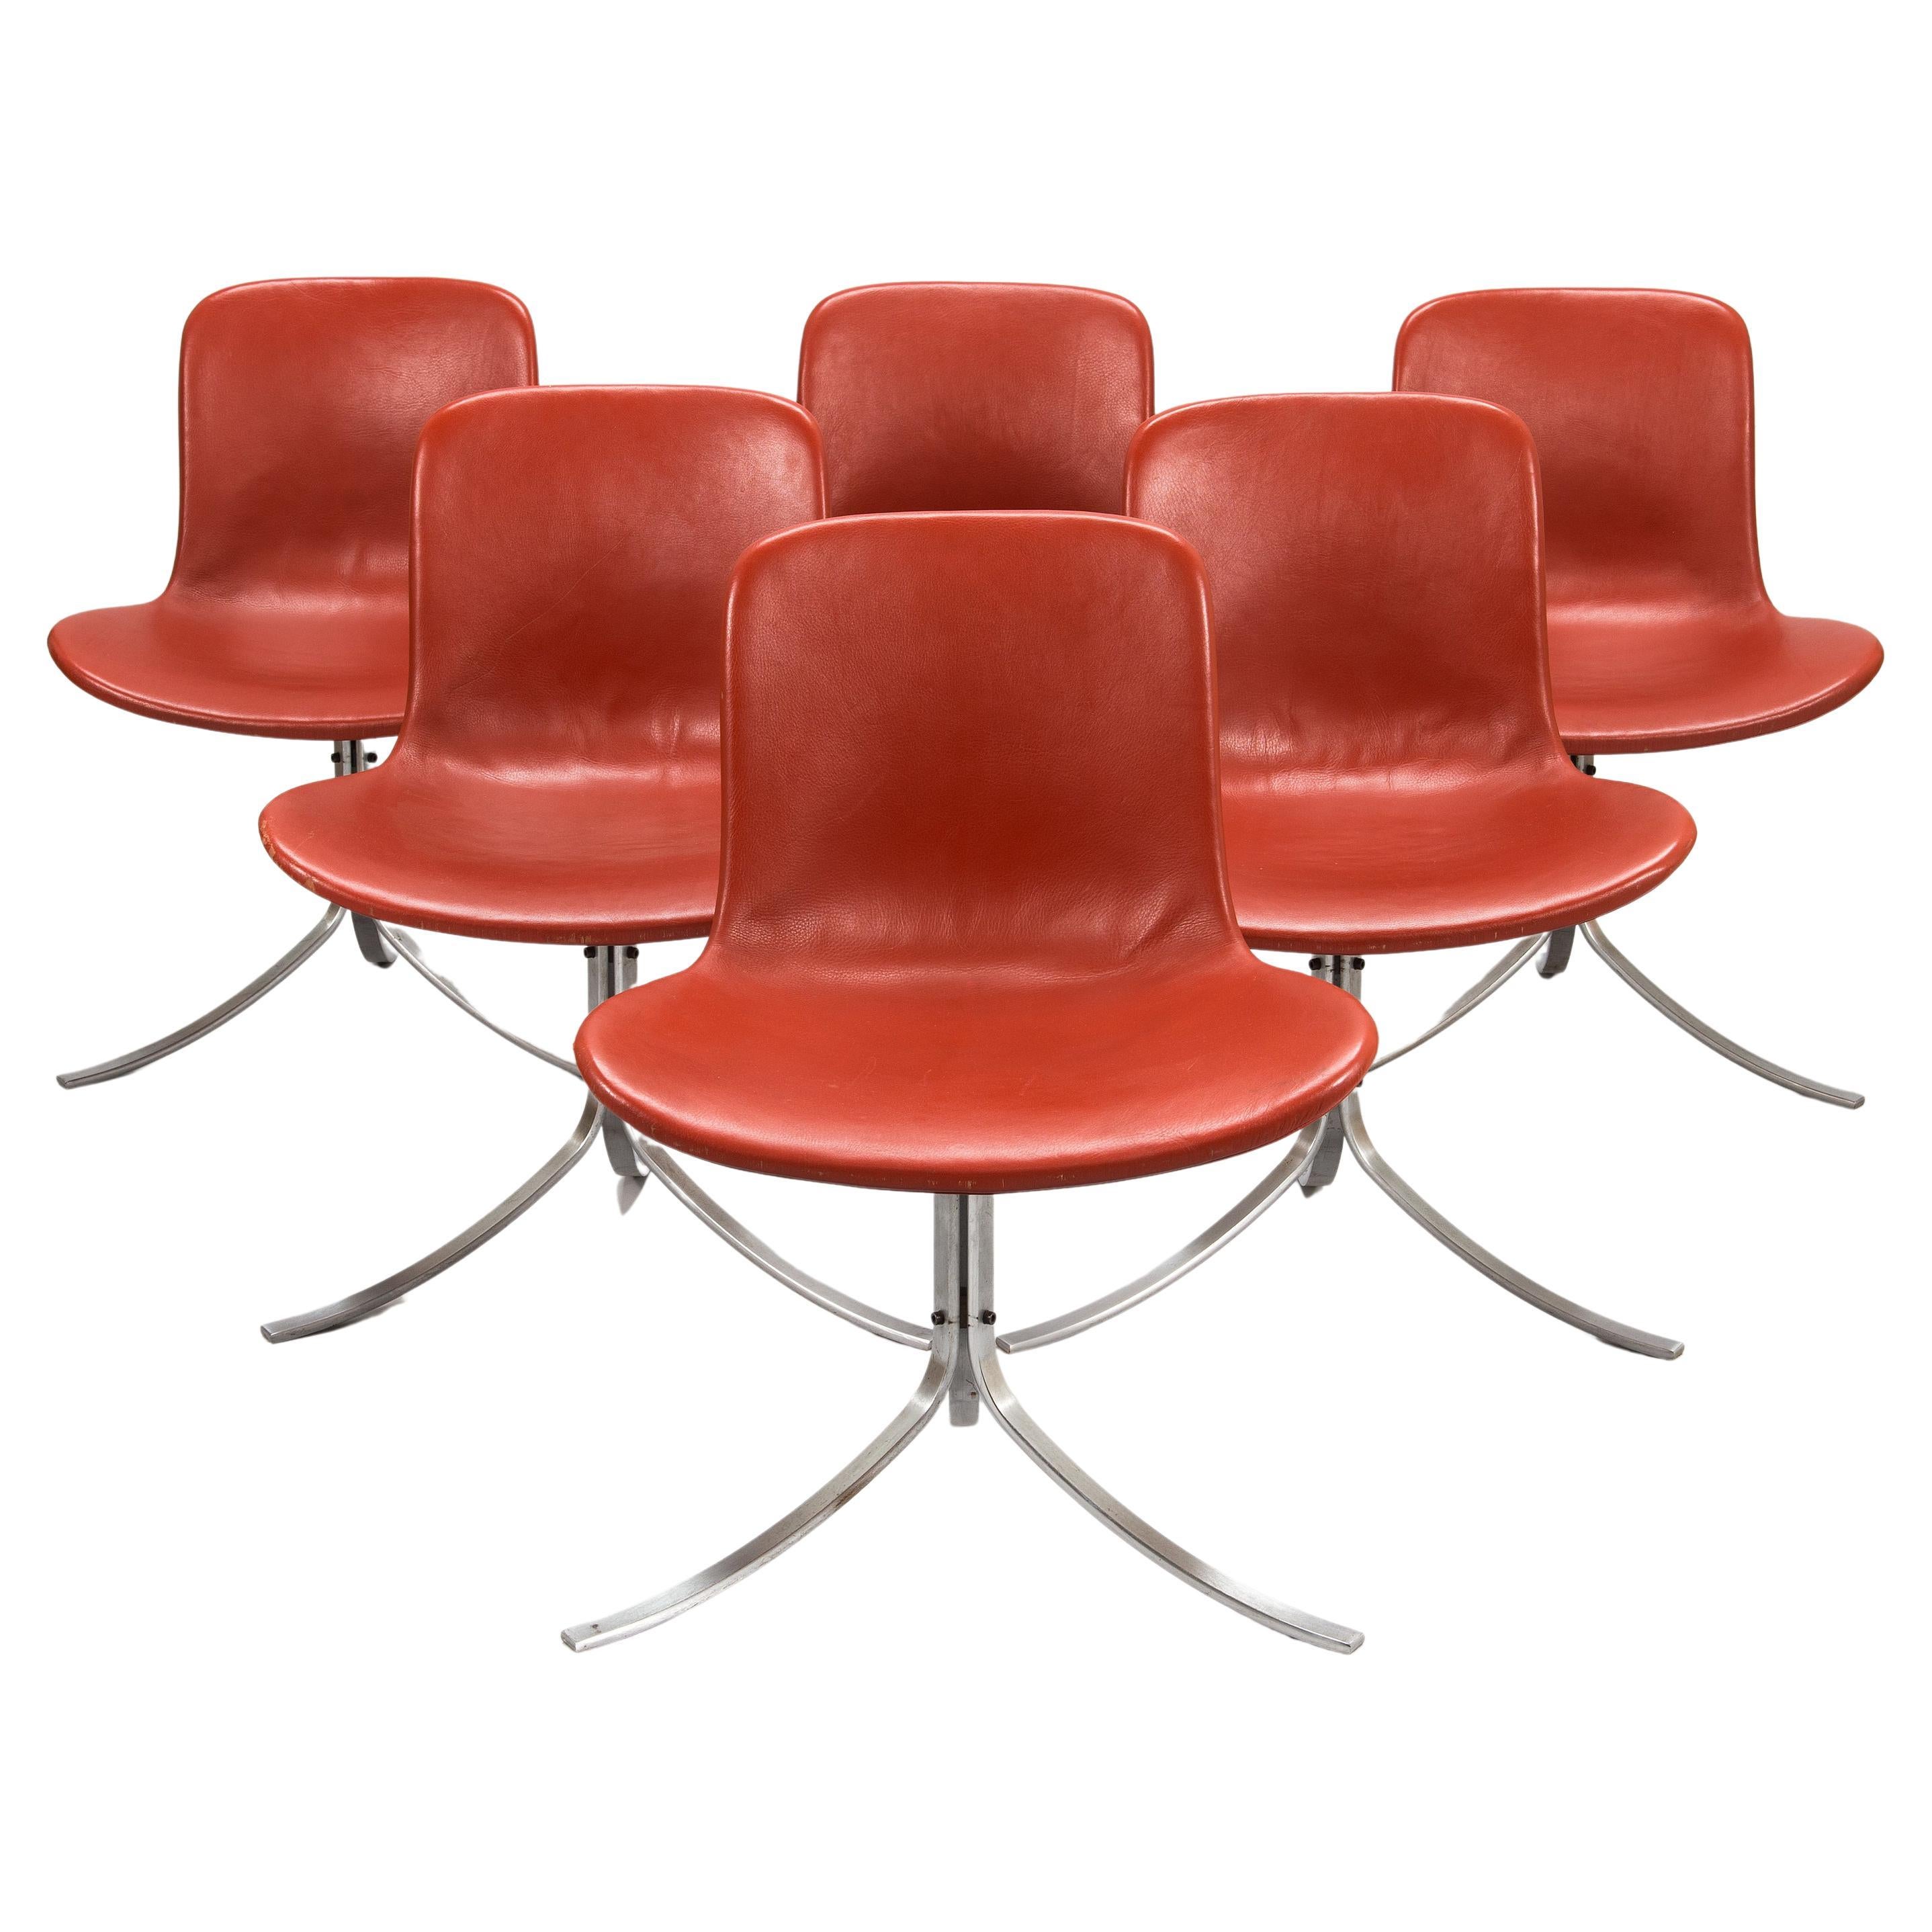 Poul Kjaerholm PK9 Chairs, Vintage Red Leather Upholstered, Set of 6